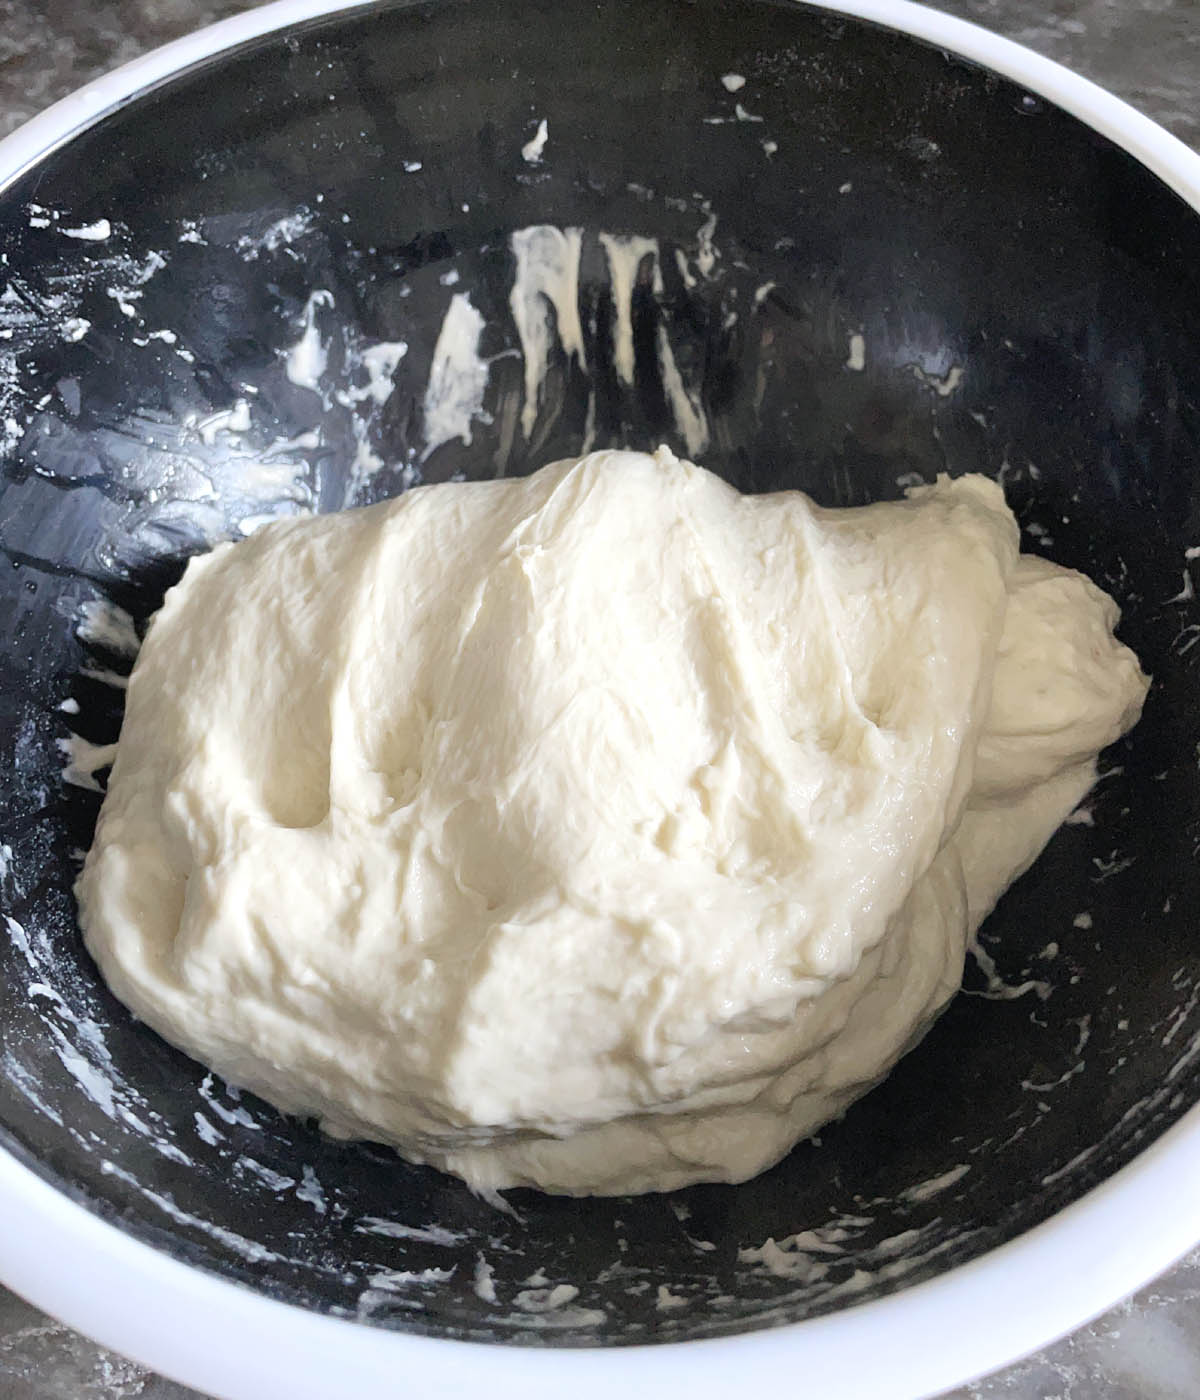 White bread dough in a round black and white bowl.